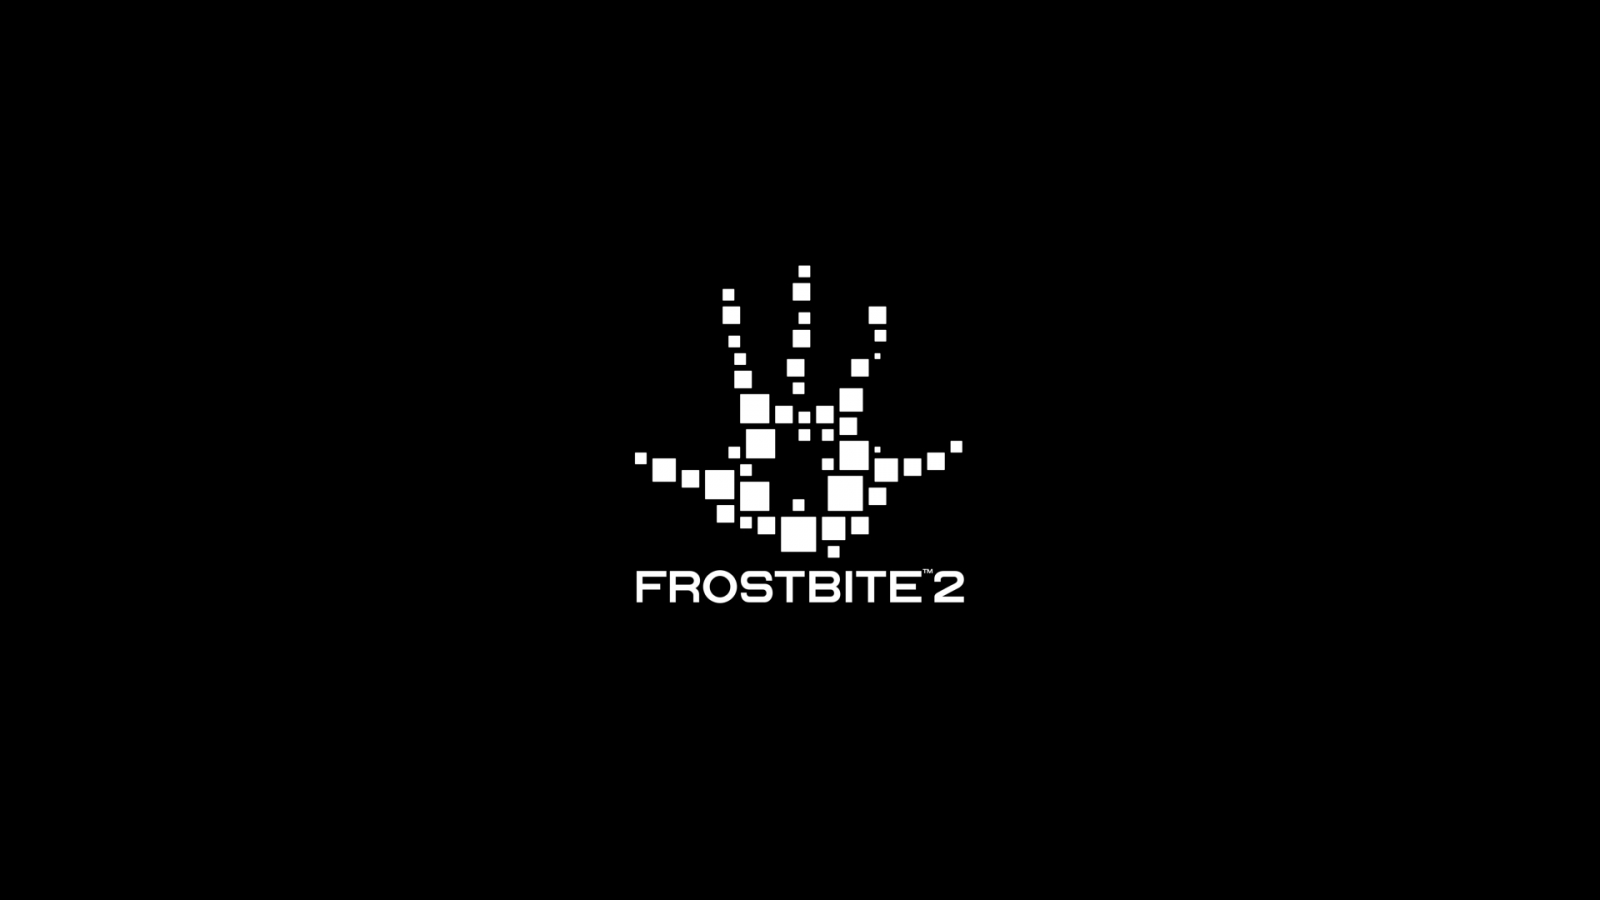 Frostbite 2 for 1600 x 900 HDTV resolution